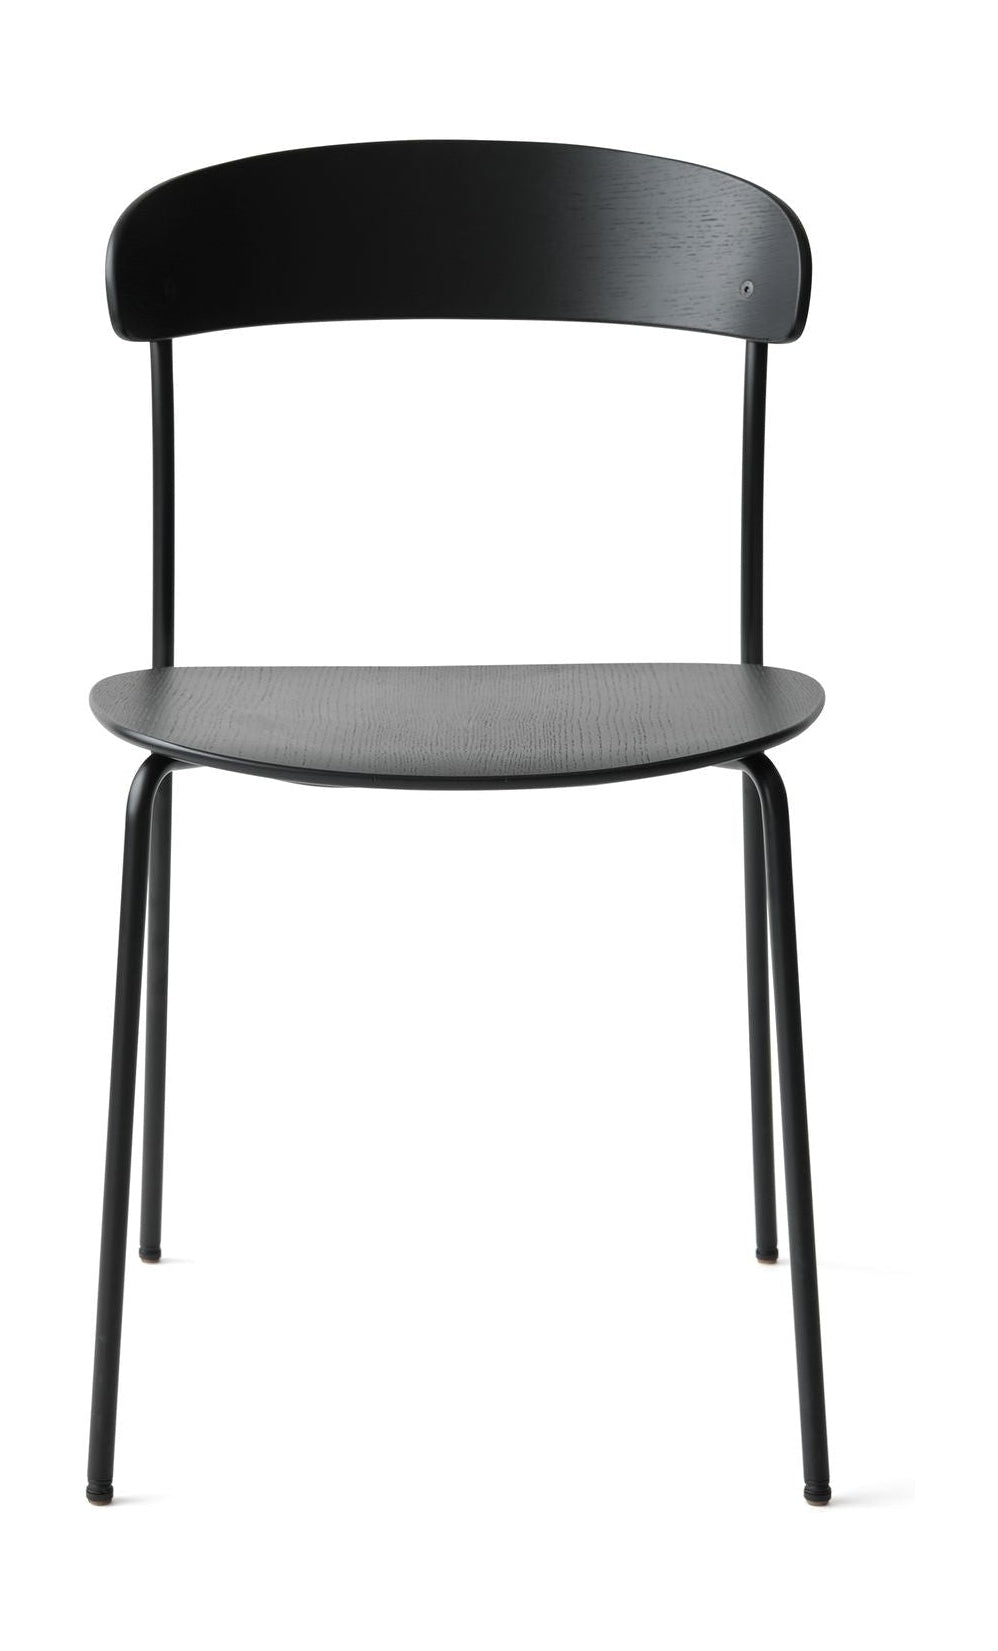 New Works Fehlender Stuhl, schwarz